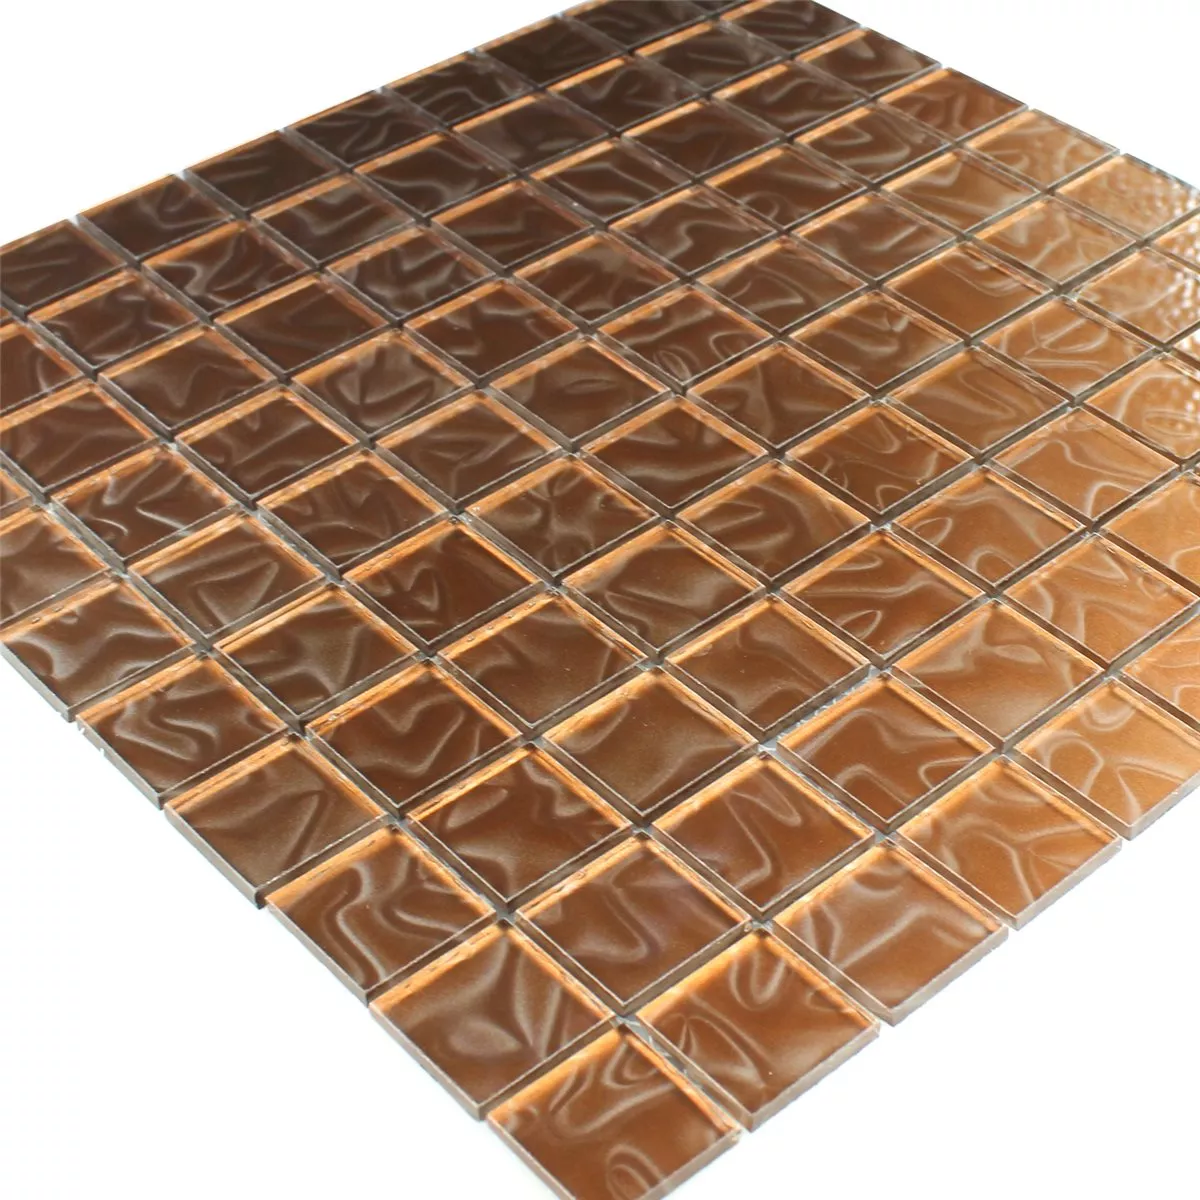 Sample Mosaic Tiles Glass Calypso Brown